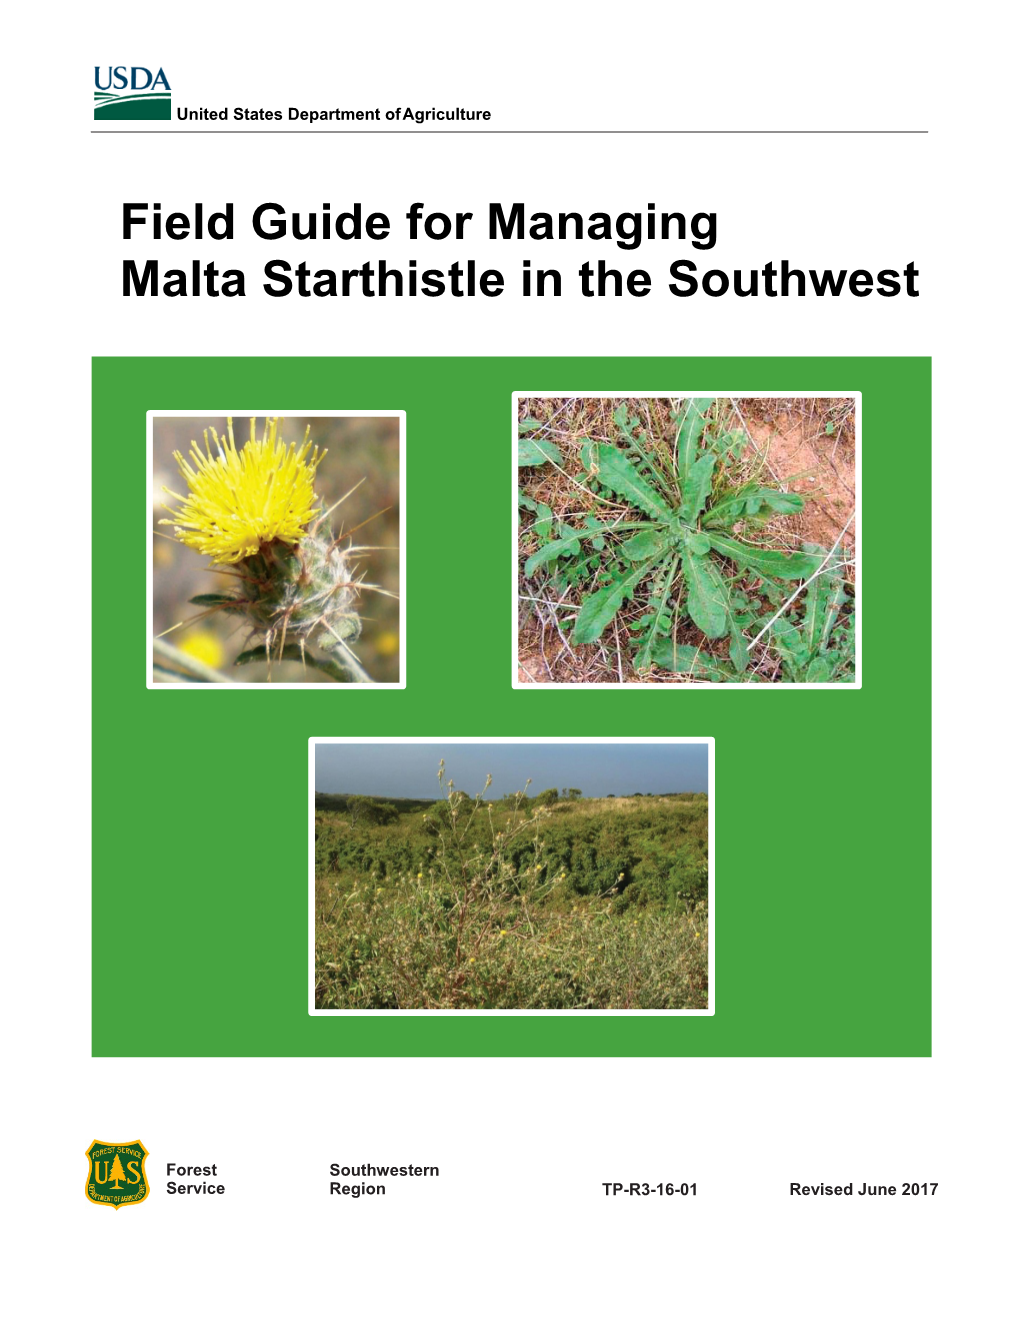 Field Guide for Managing Malta Starthistle in the Southwest